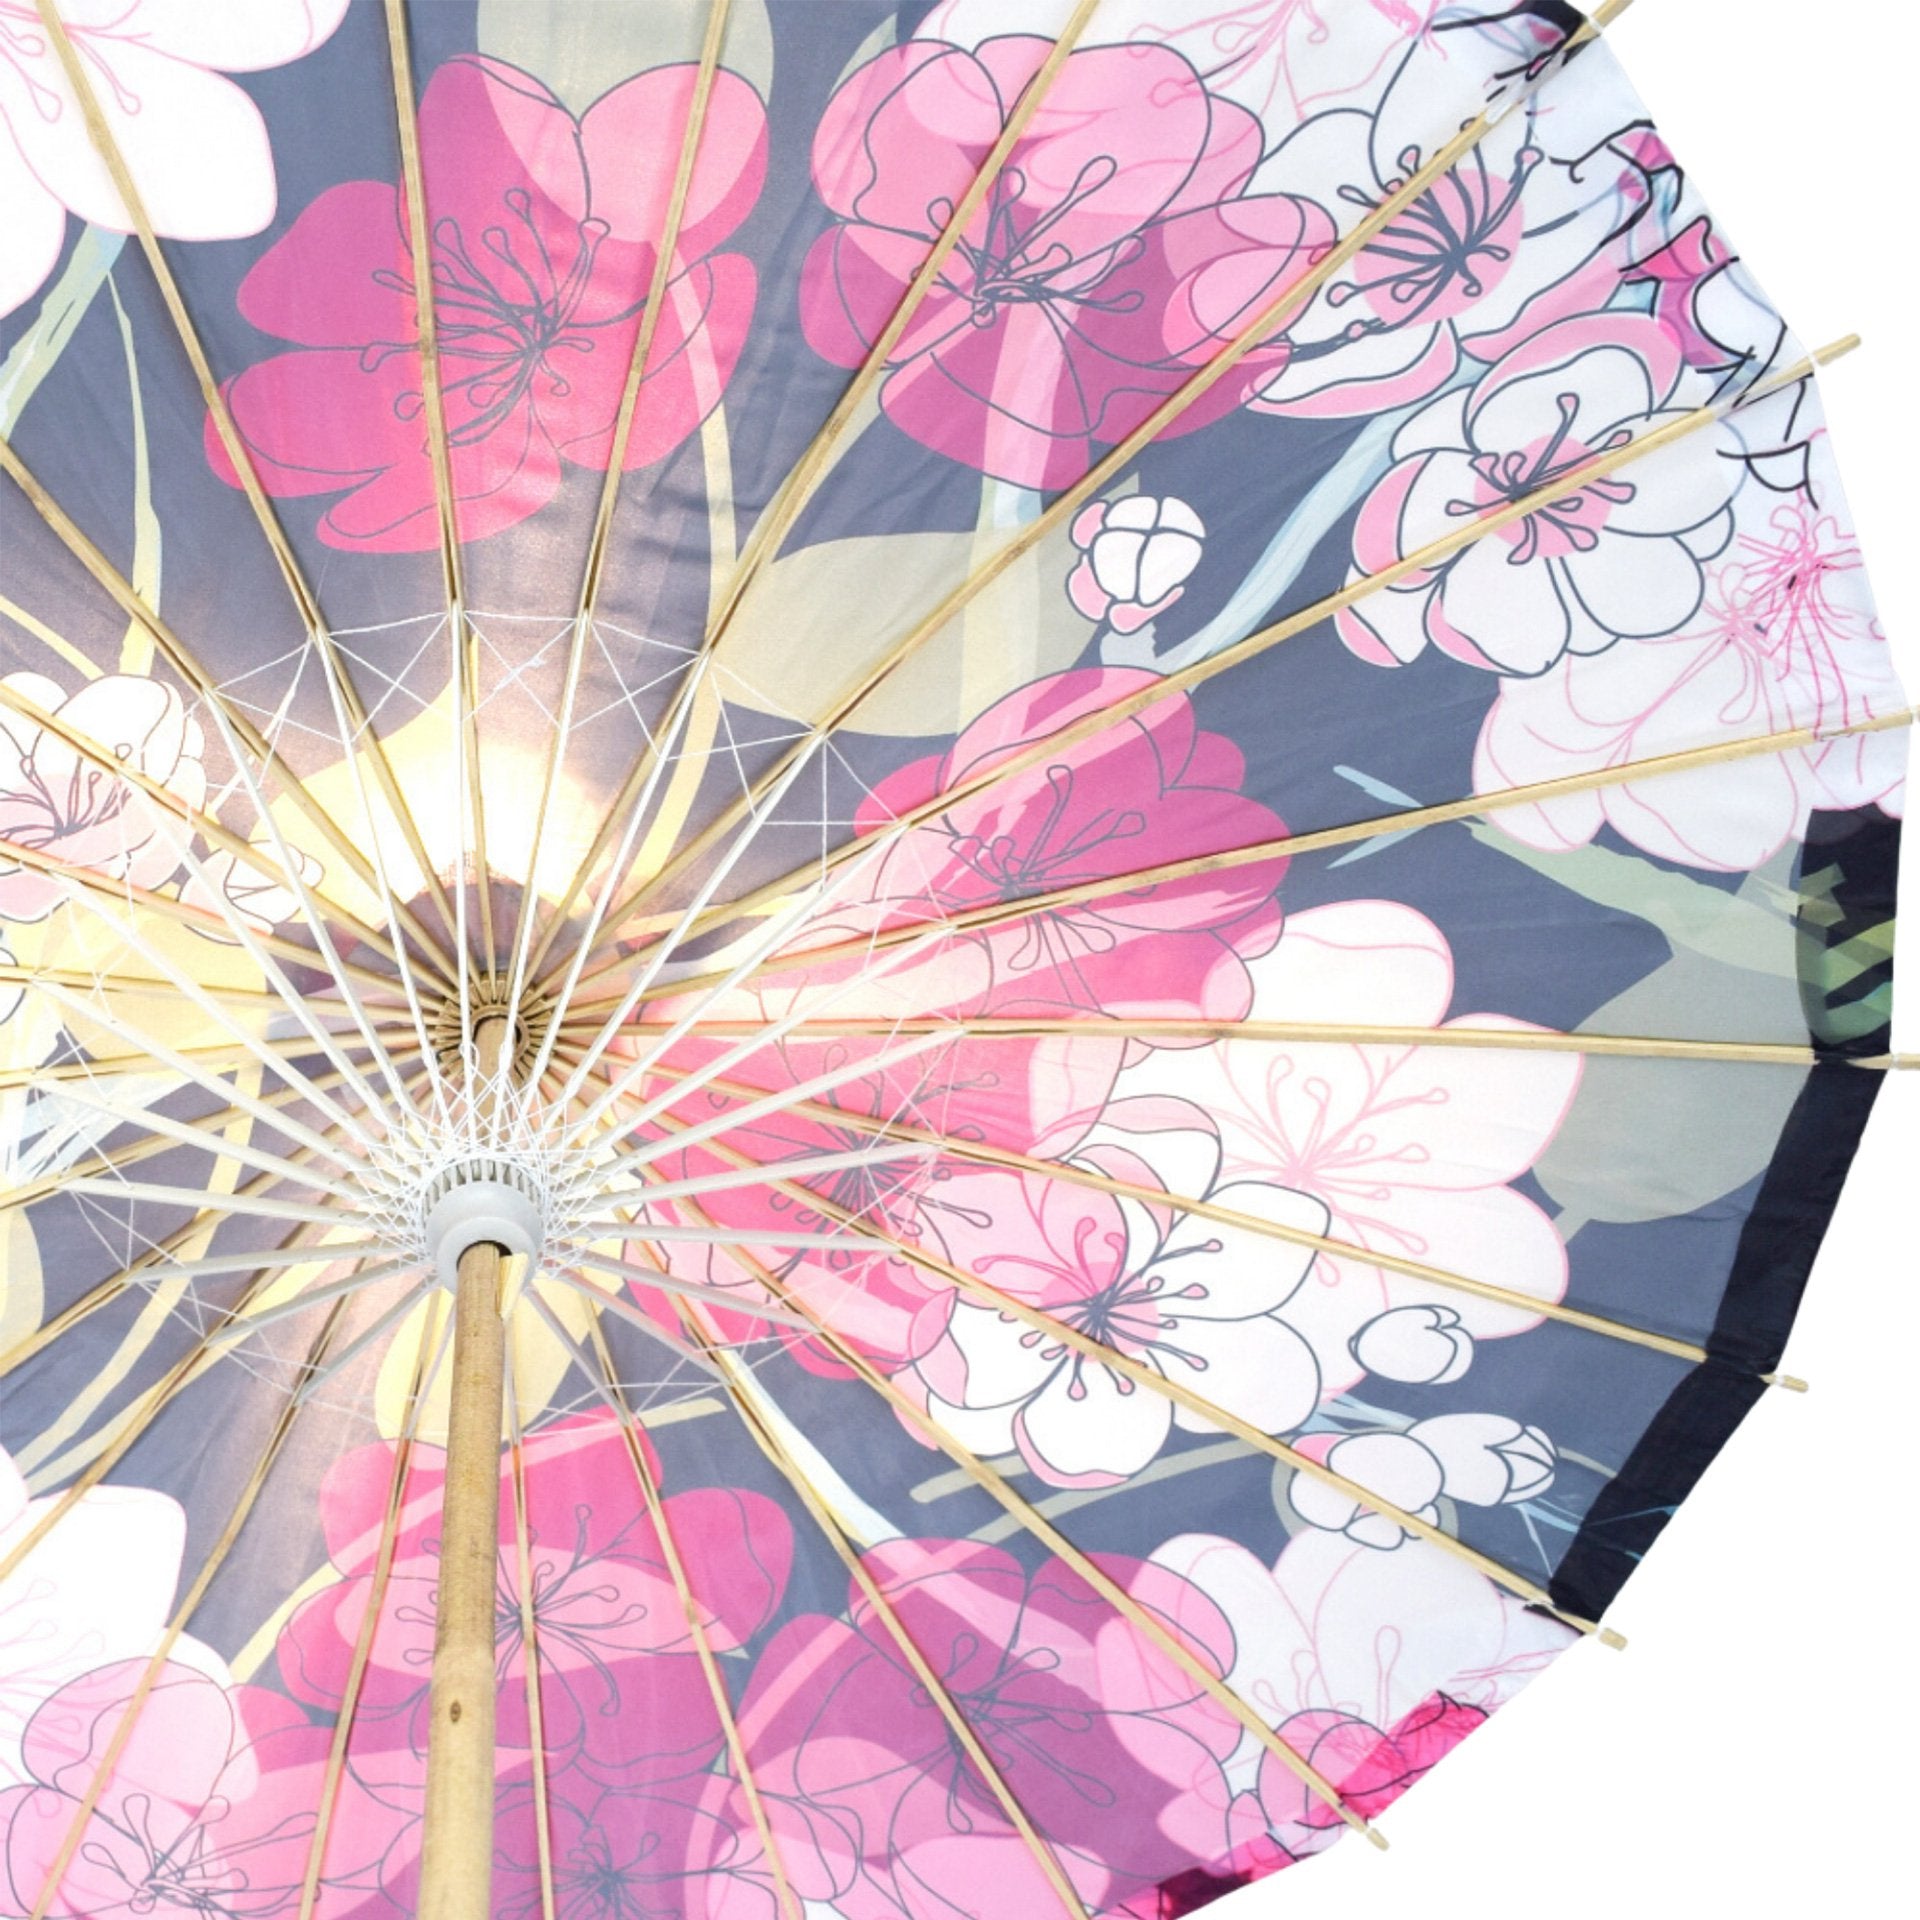 32" Midnight Spring Cherry Blossom Premium Nylon Parasol Umbrella with Elegant Handle